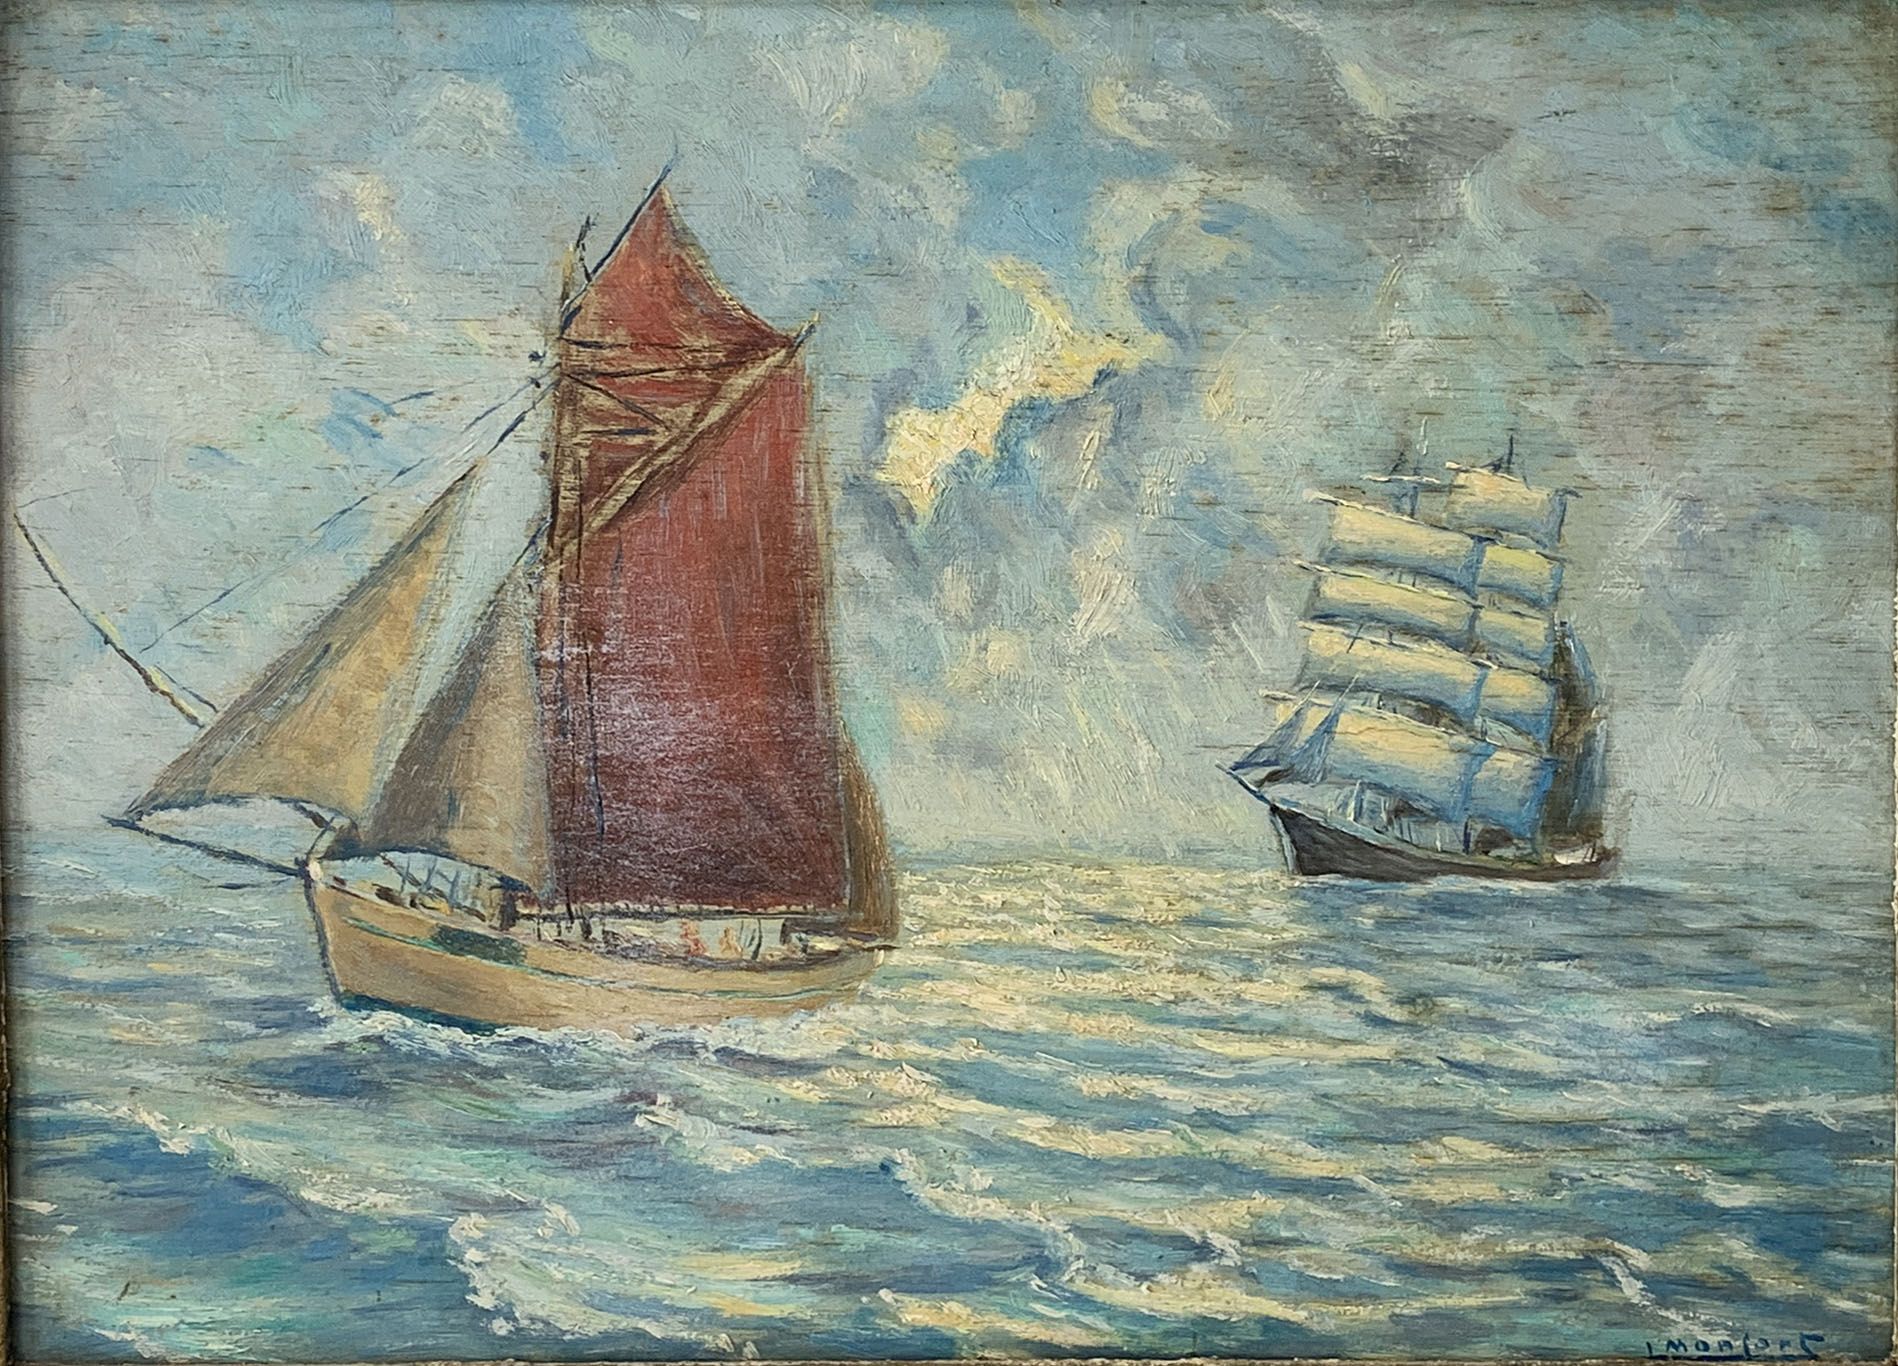 Null 20世纪的学校。

帆船。

板上油彩。

右下角有签名 "L. MONFORT"。

27 x 35厘米